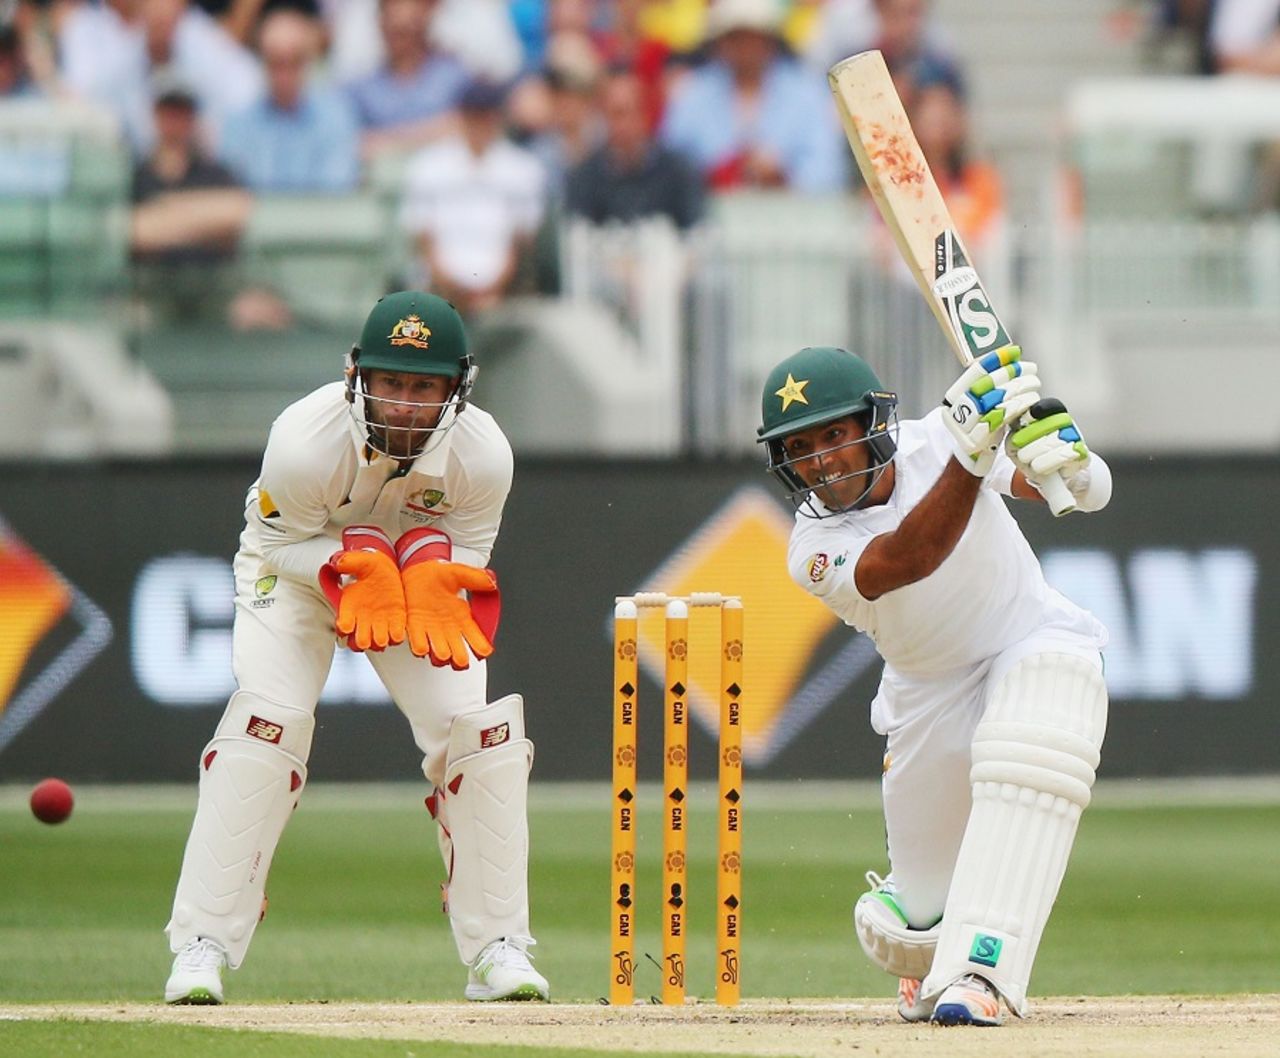 Asad Shafiq drills one through the off side, Australia v Pakistan, 2nd Test, 2nd day, Melbourne, December 27, 2016